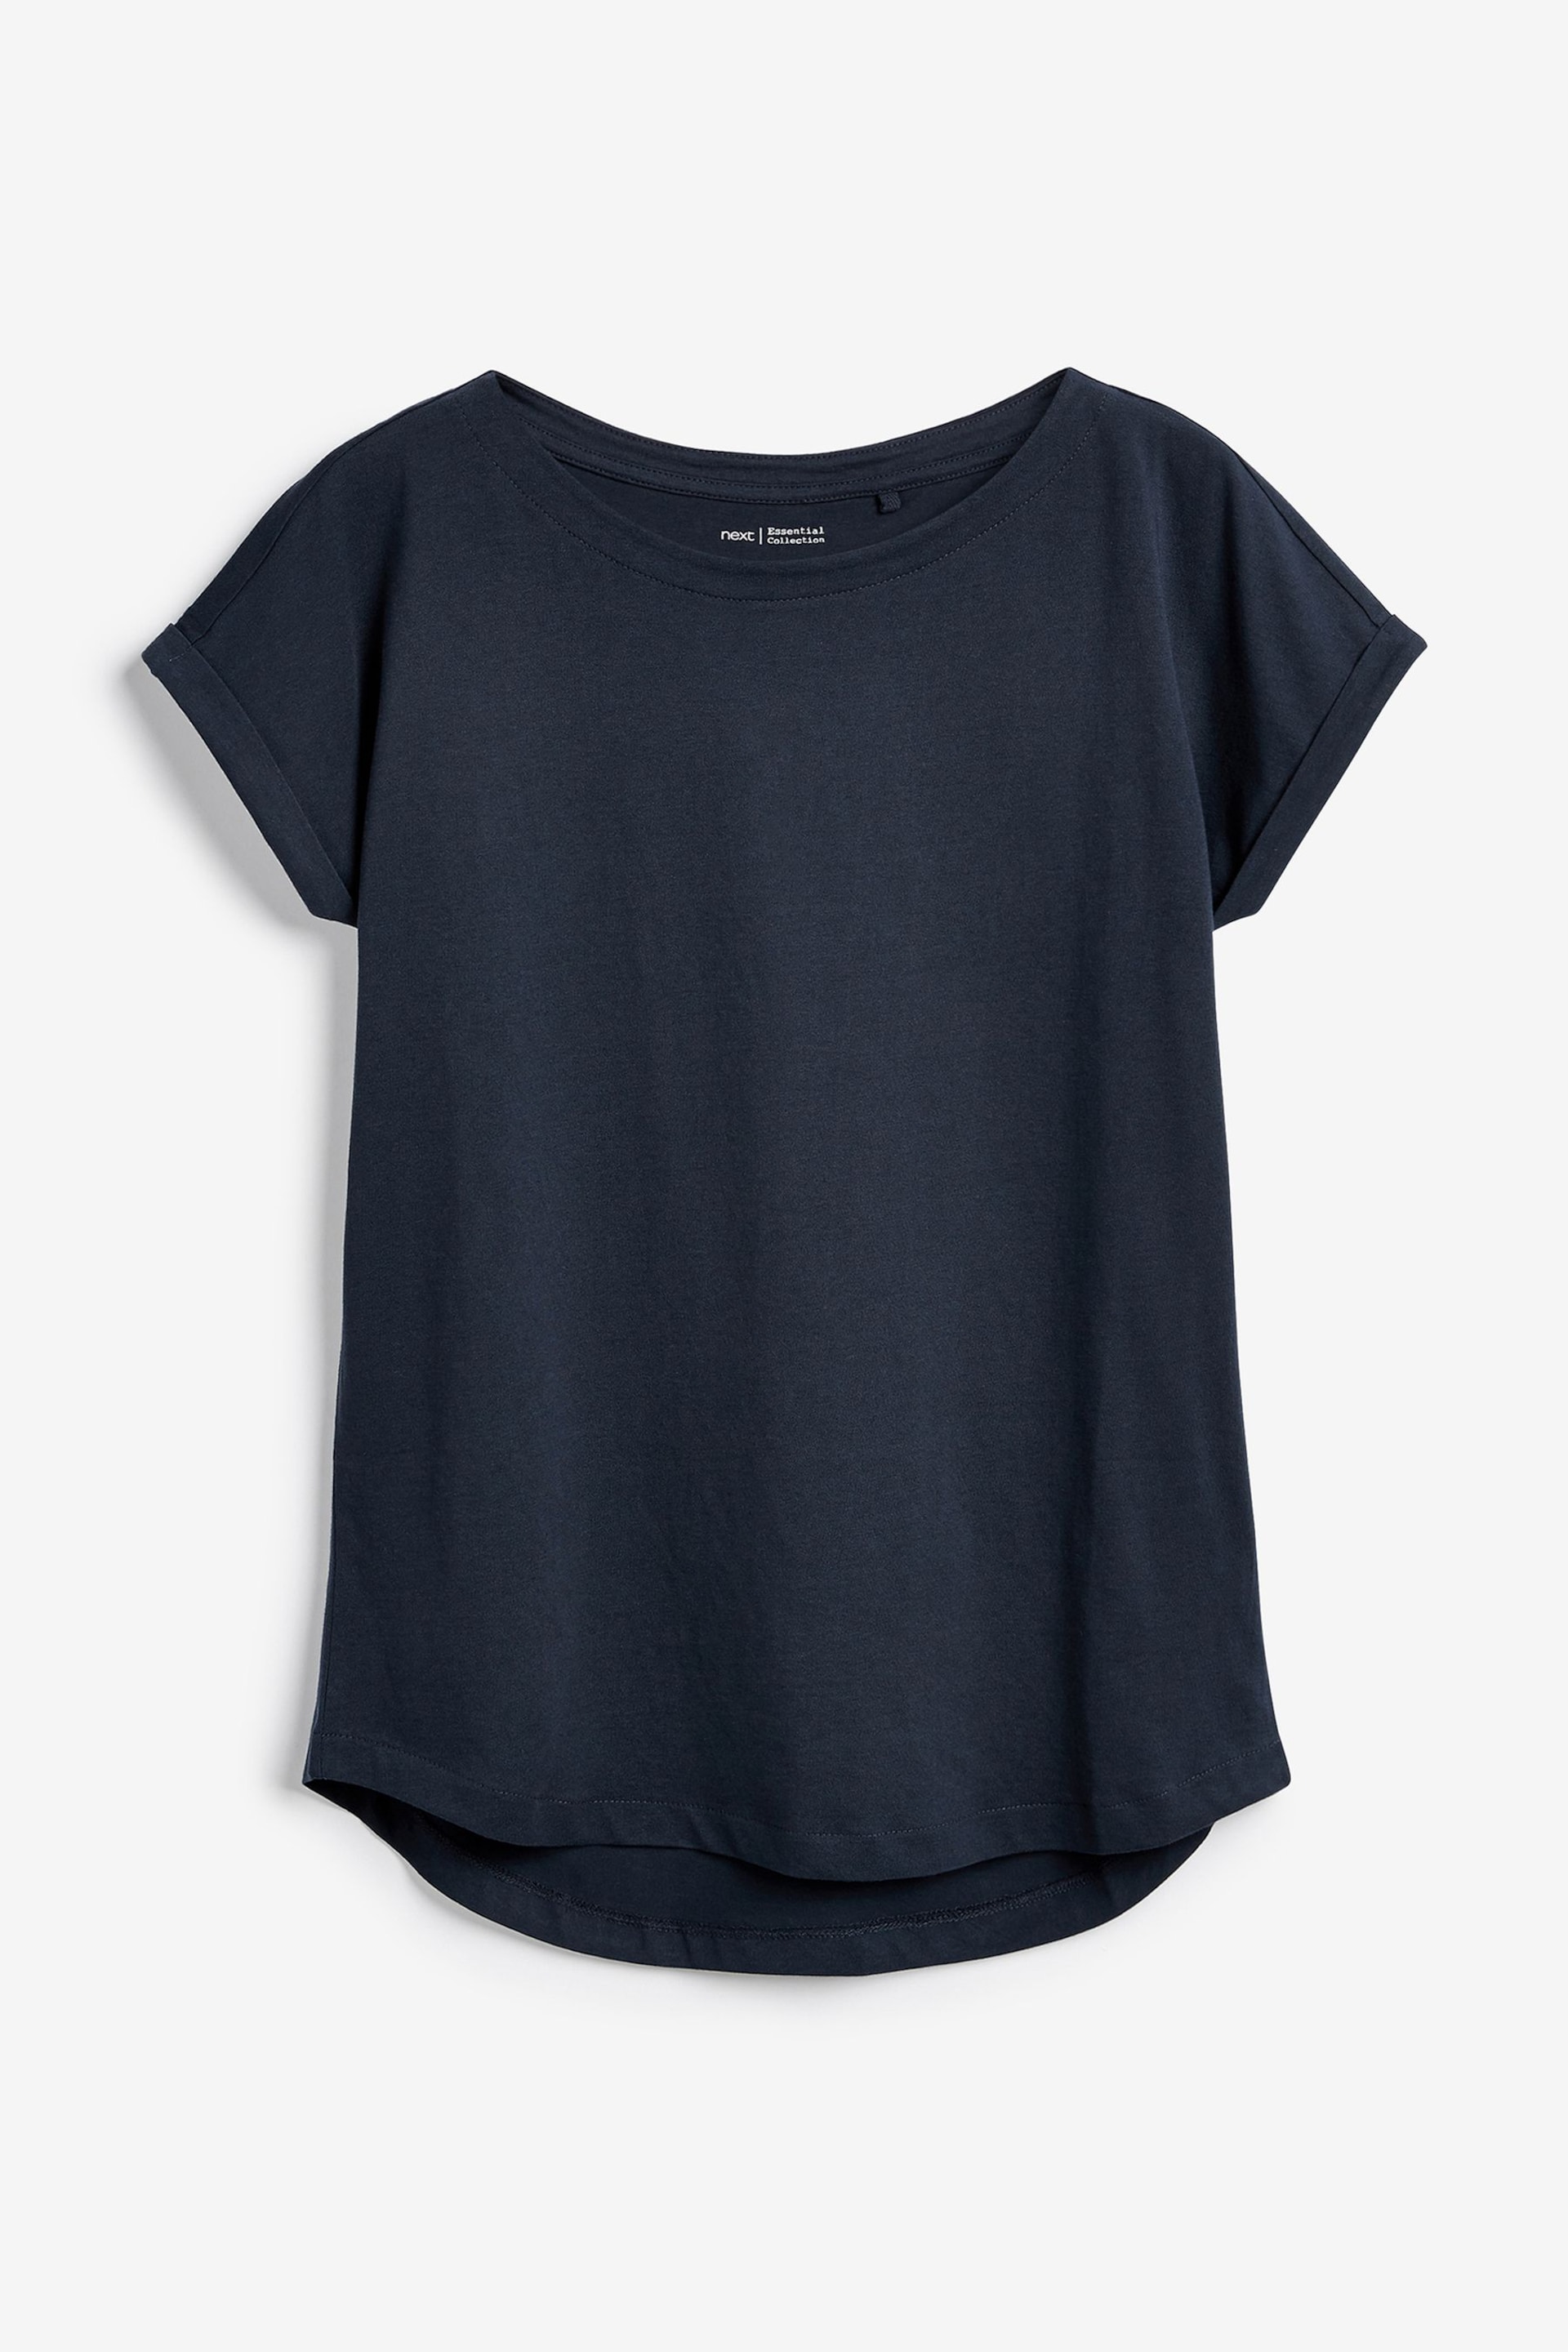 Navy Round Neck Cap Sleeve T-Shirt - Image 4 of 4